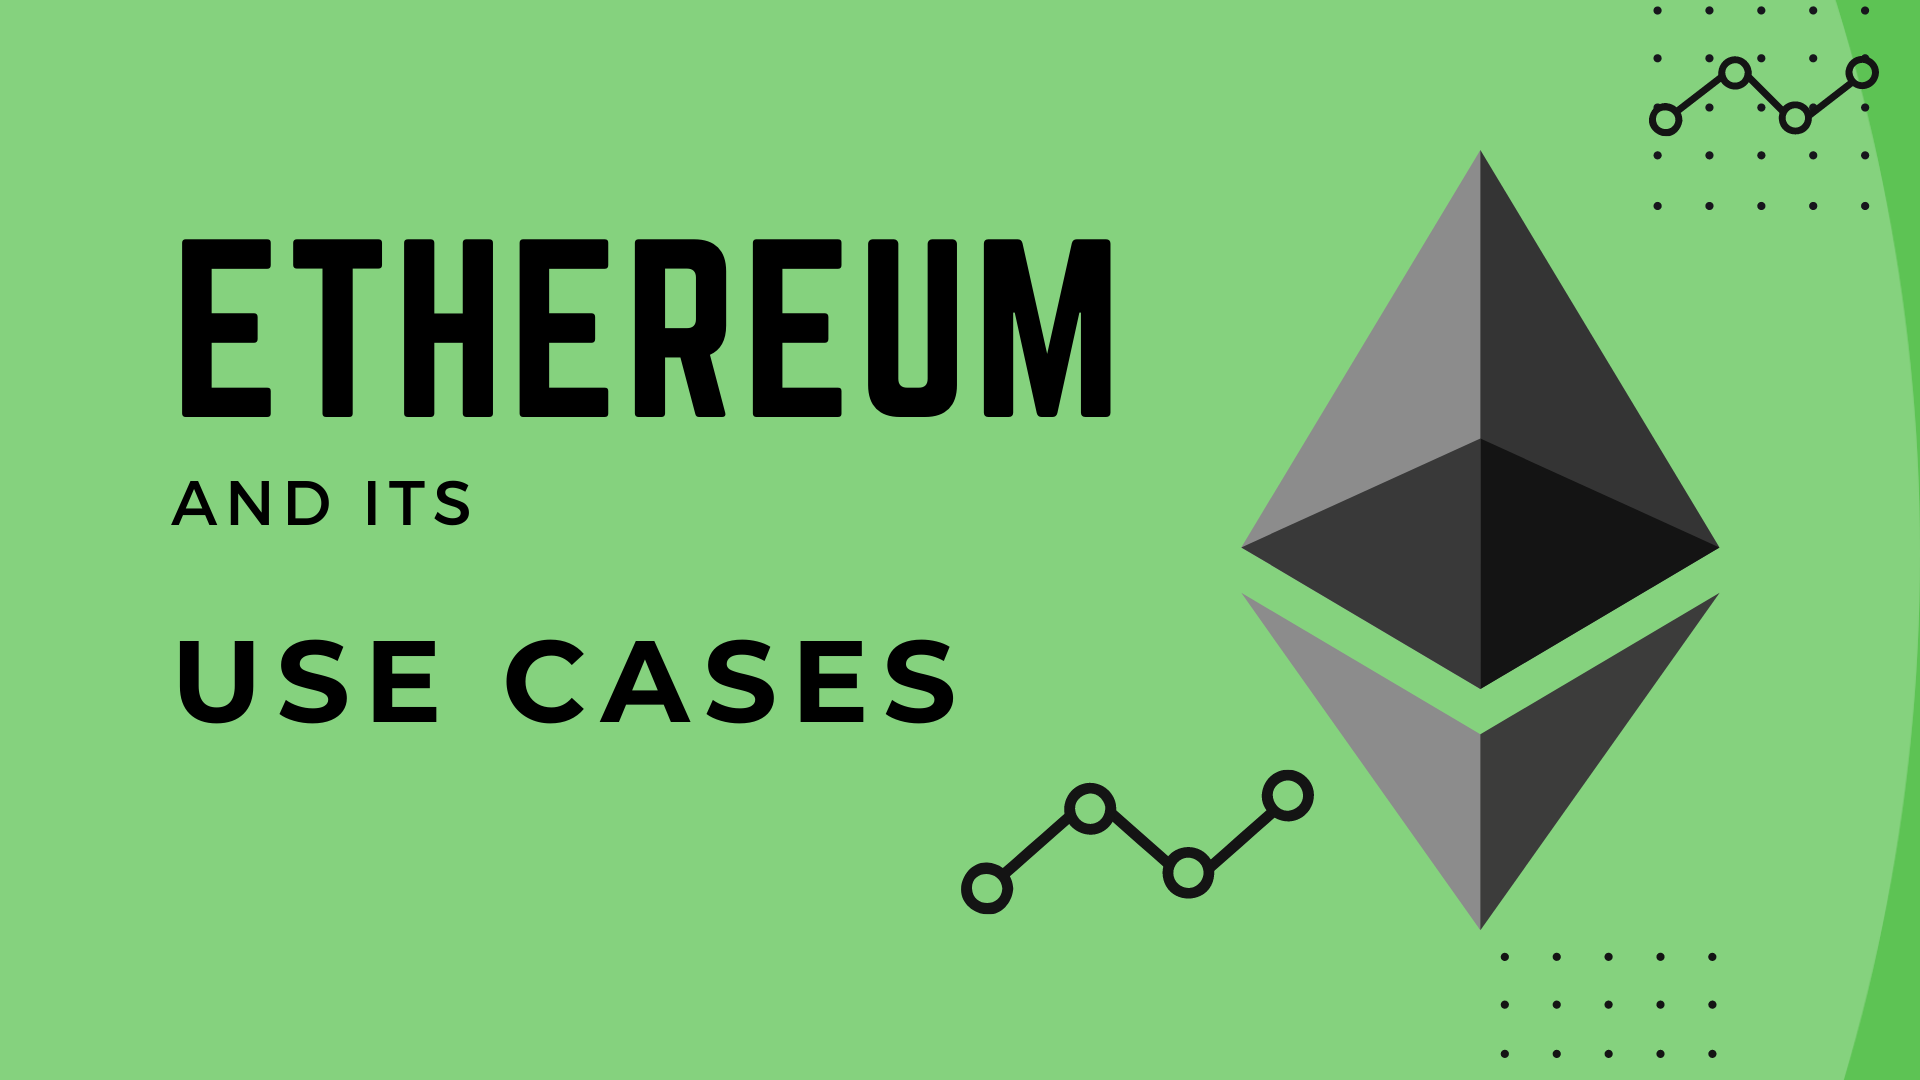 Use case for ethereum ethereum rig case